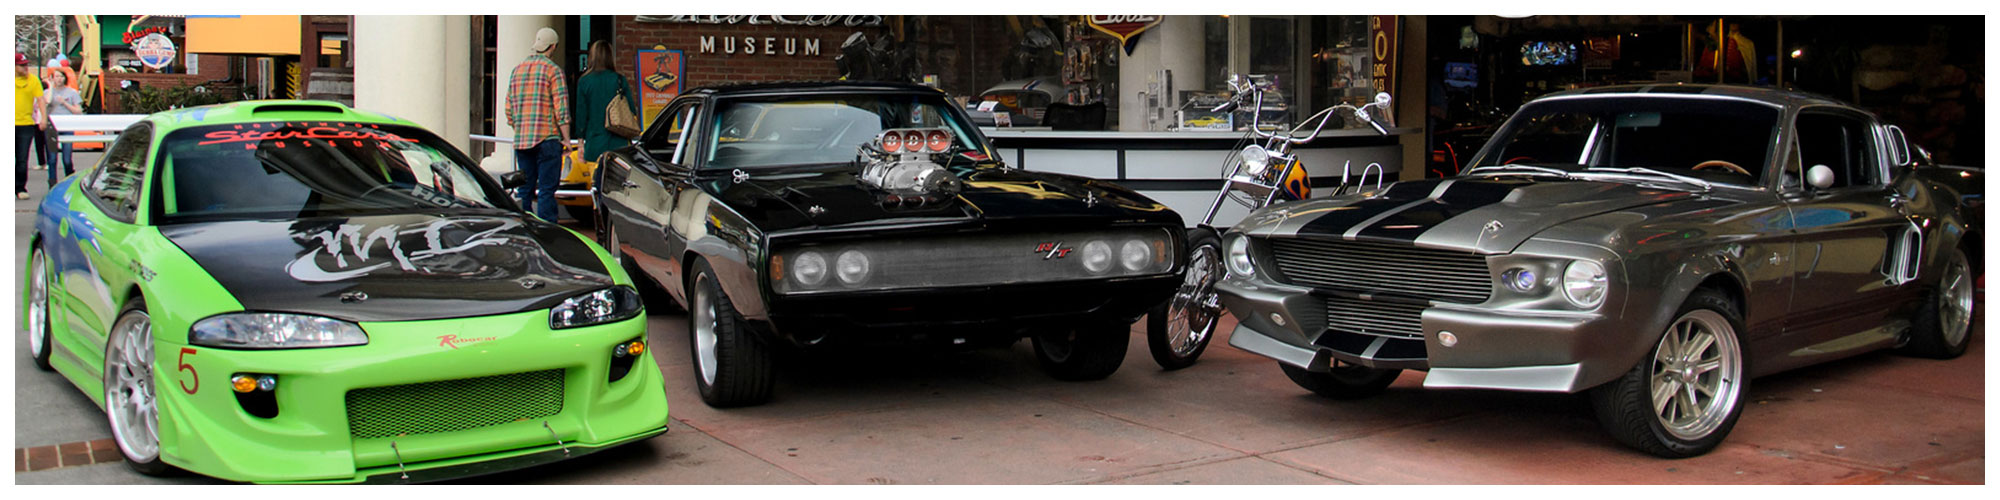 Hollywood Star Cars Museum (Header Background) | Gatlinburg Attractions